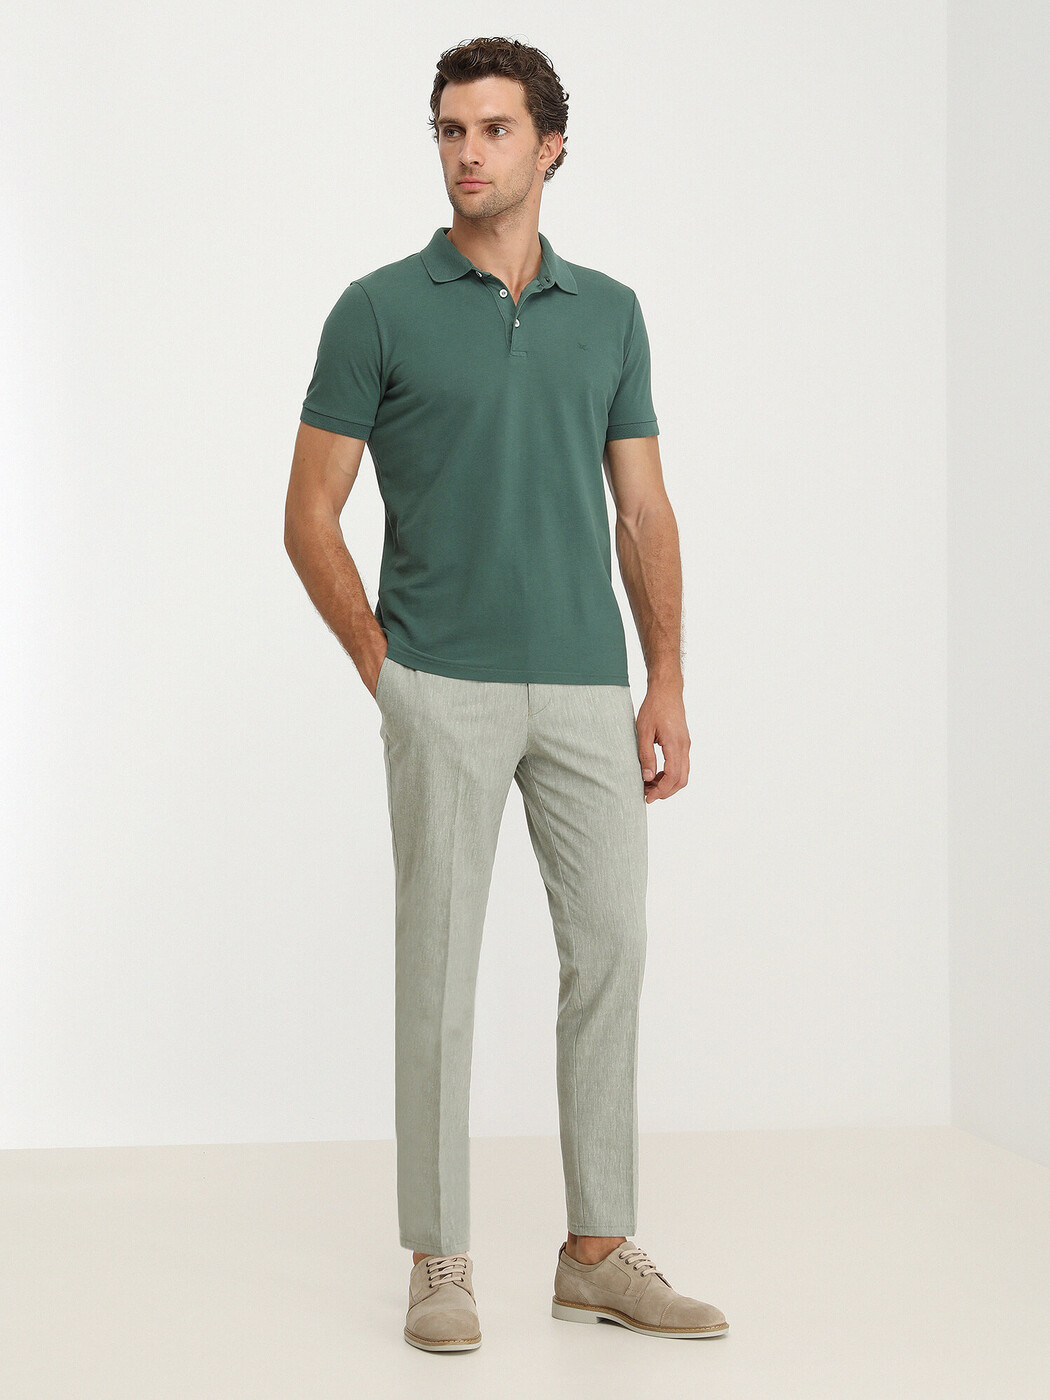 KİP - Koyu Yeşil Düz Polo Yaka %100 Pamuk T-Shirt (1)